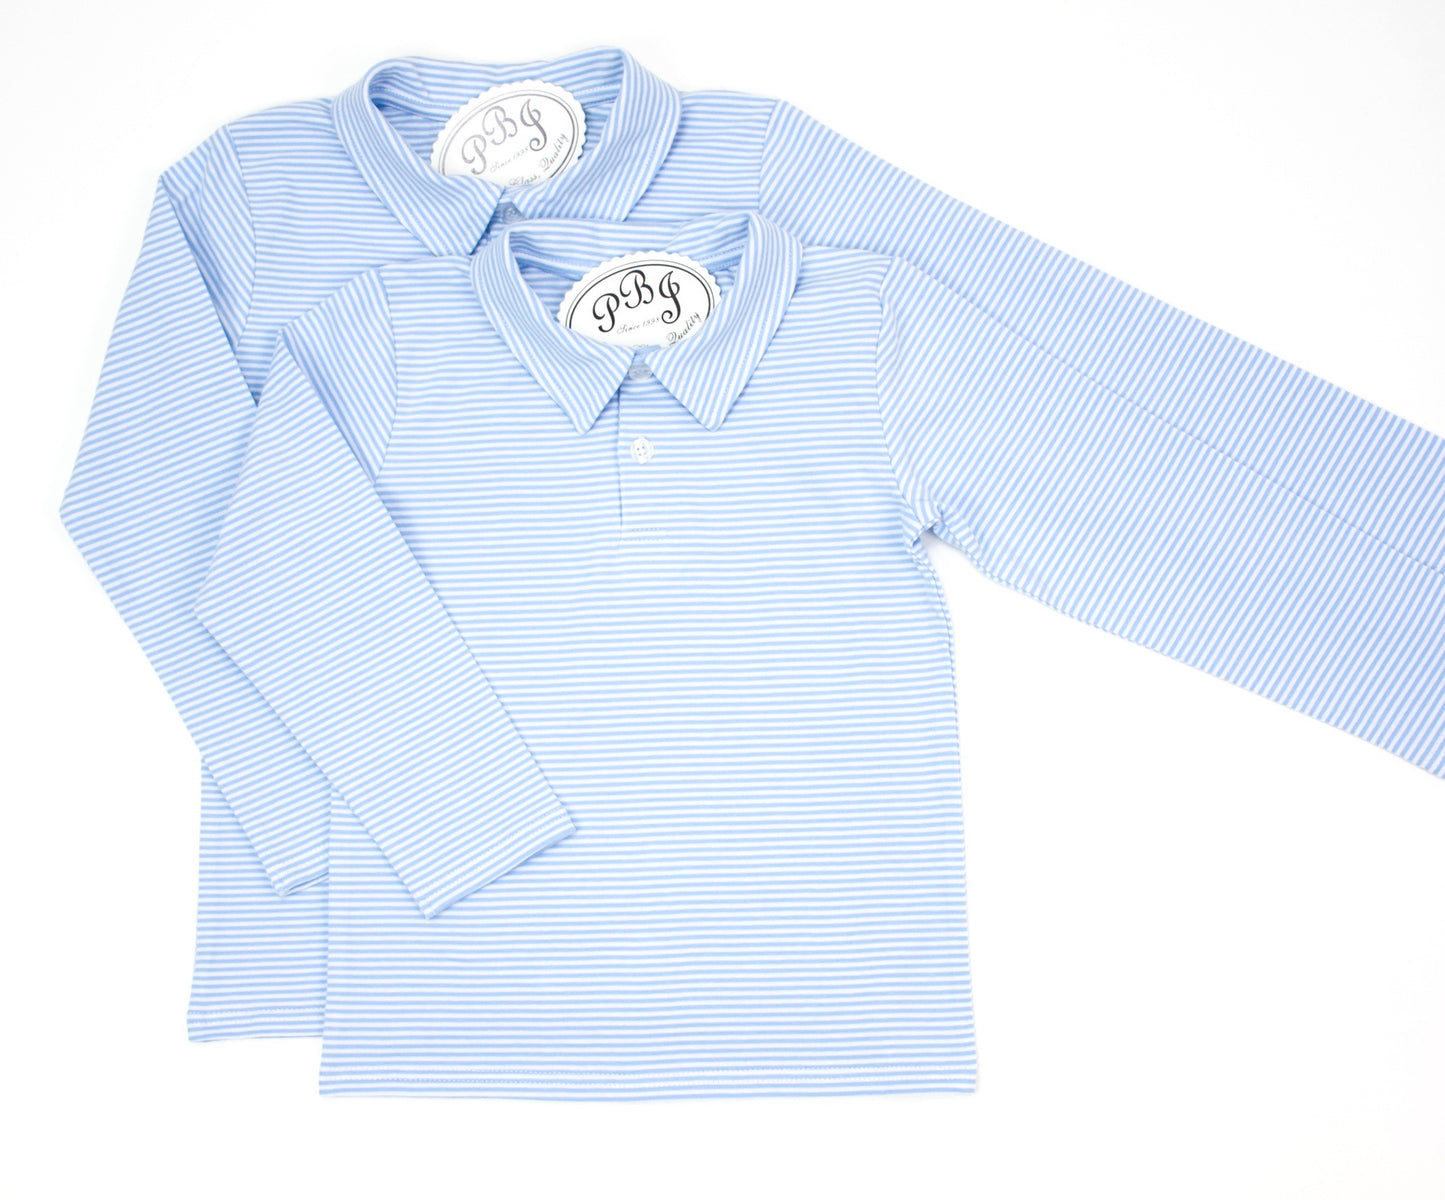 Boys blue stripes Polo/ Long sleeves - PREORDER*